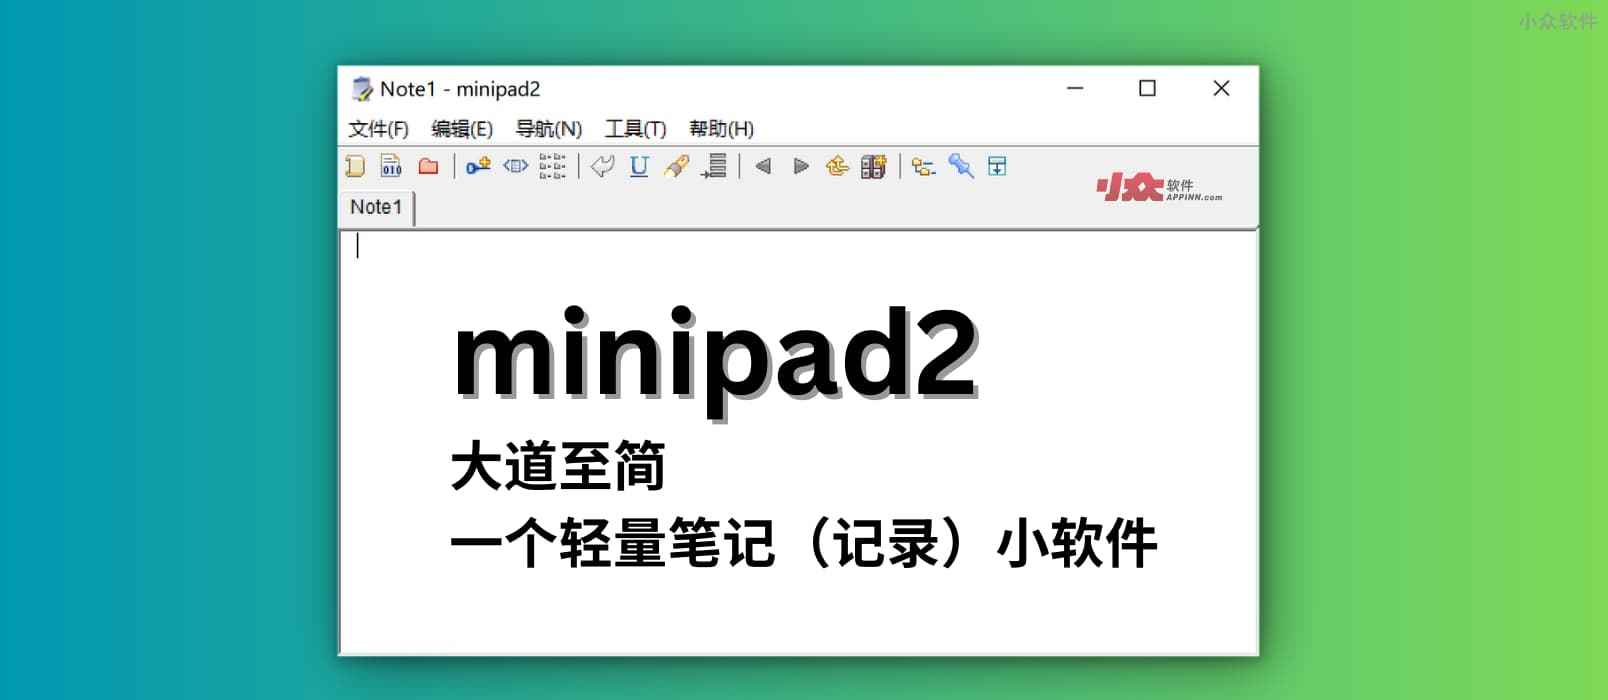 minipad2 - 大道至简，推荐一个轻量笔记（记录）小软件，231KB